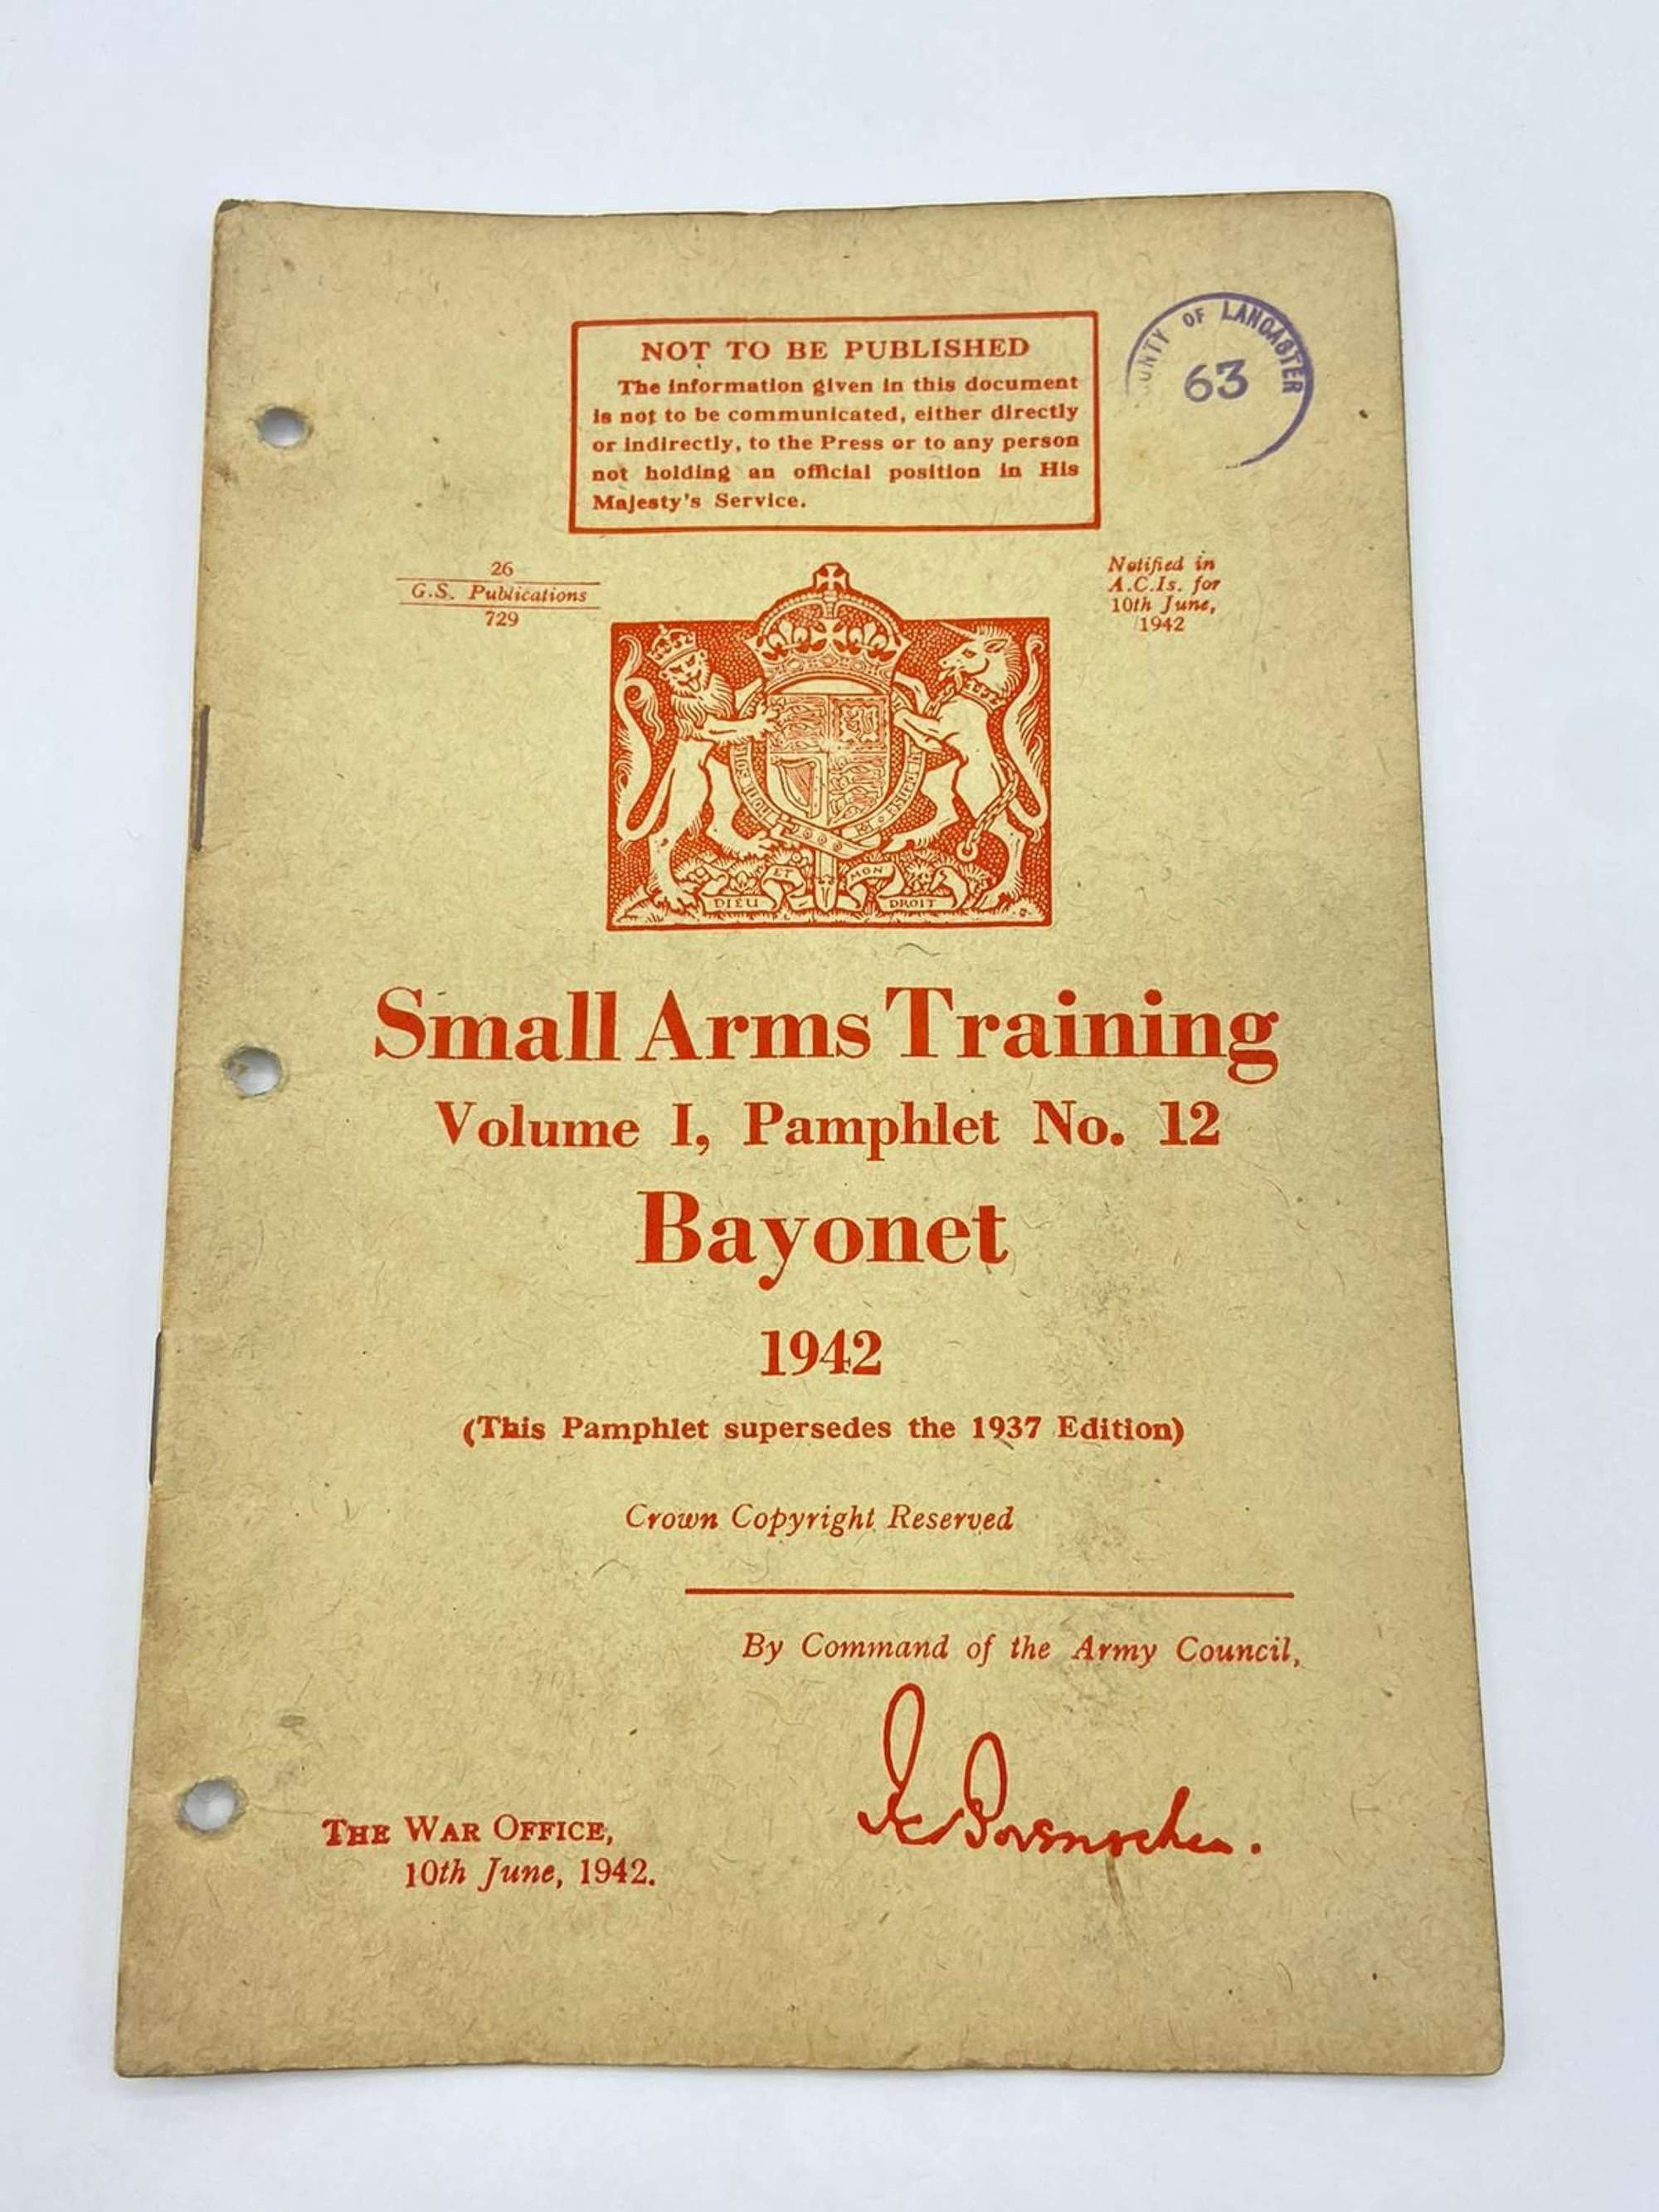 WW2 British Army Small Arms Training Bayonet 1942 Pamphlet